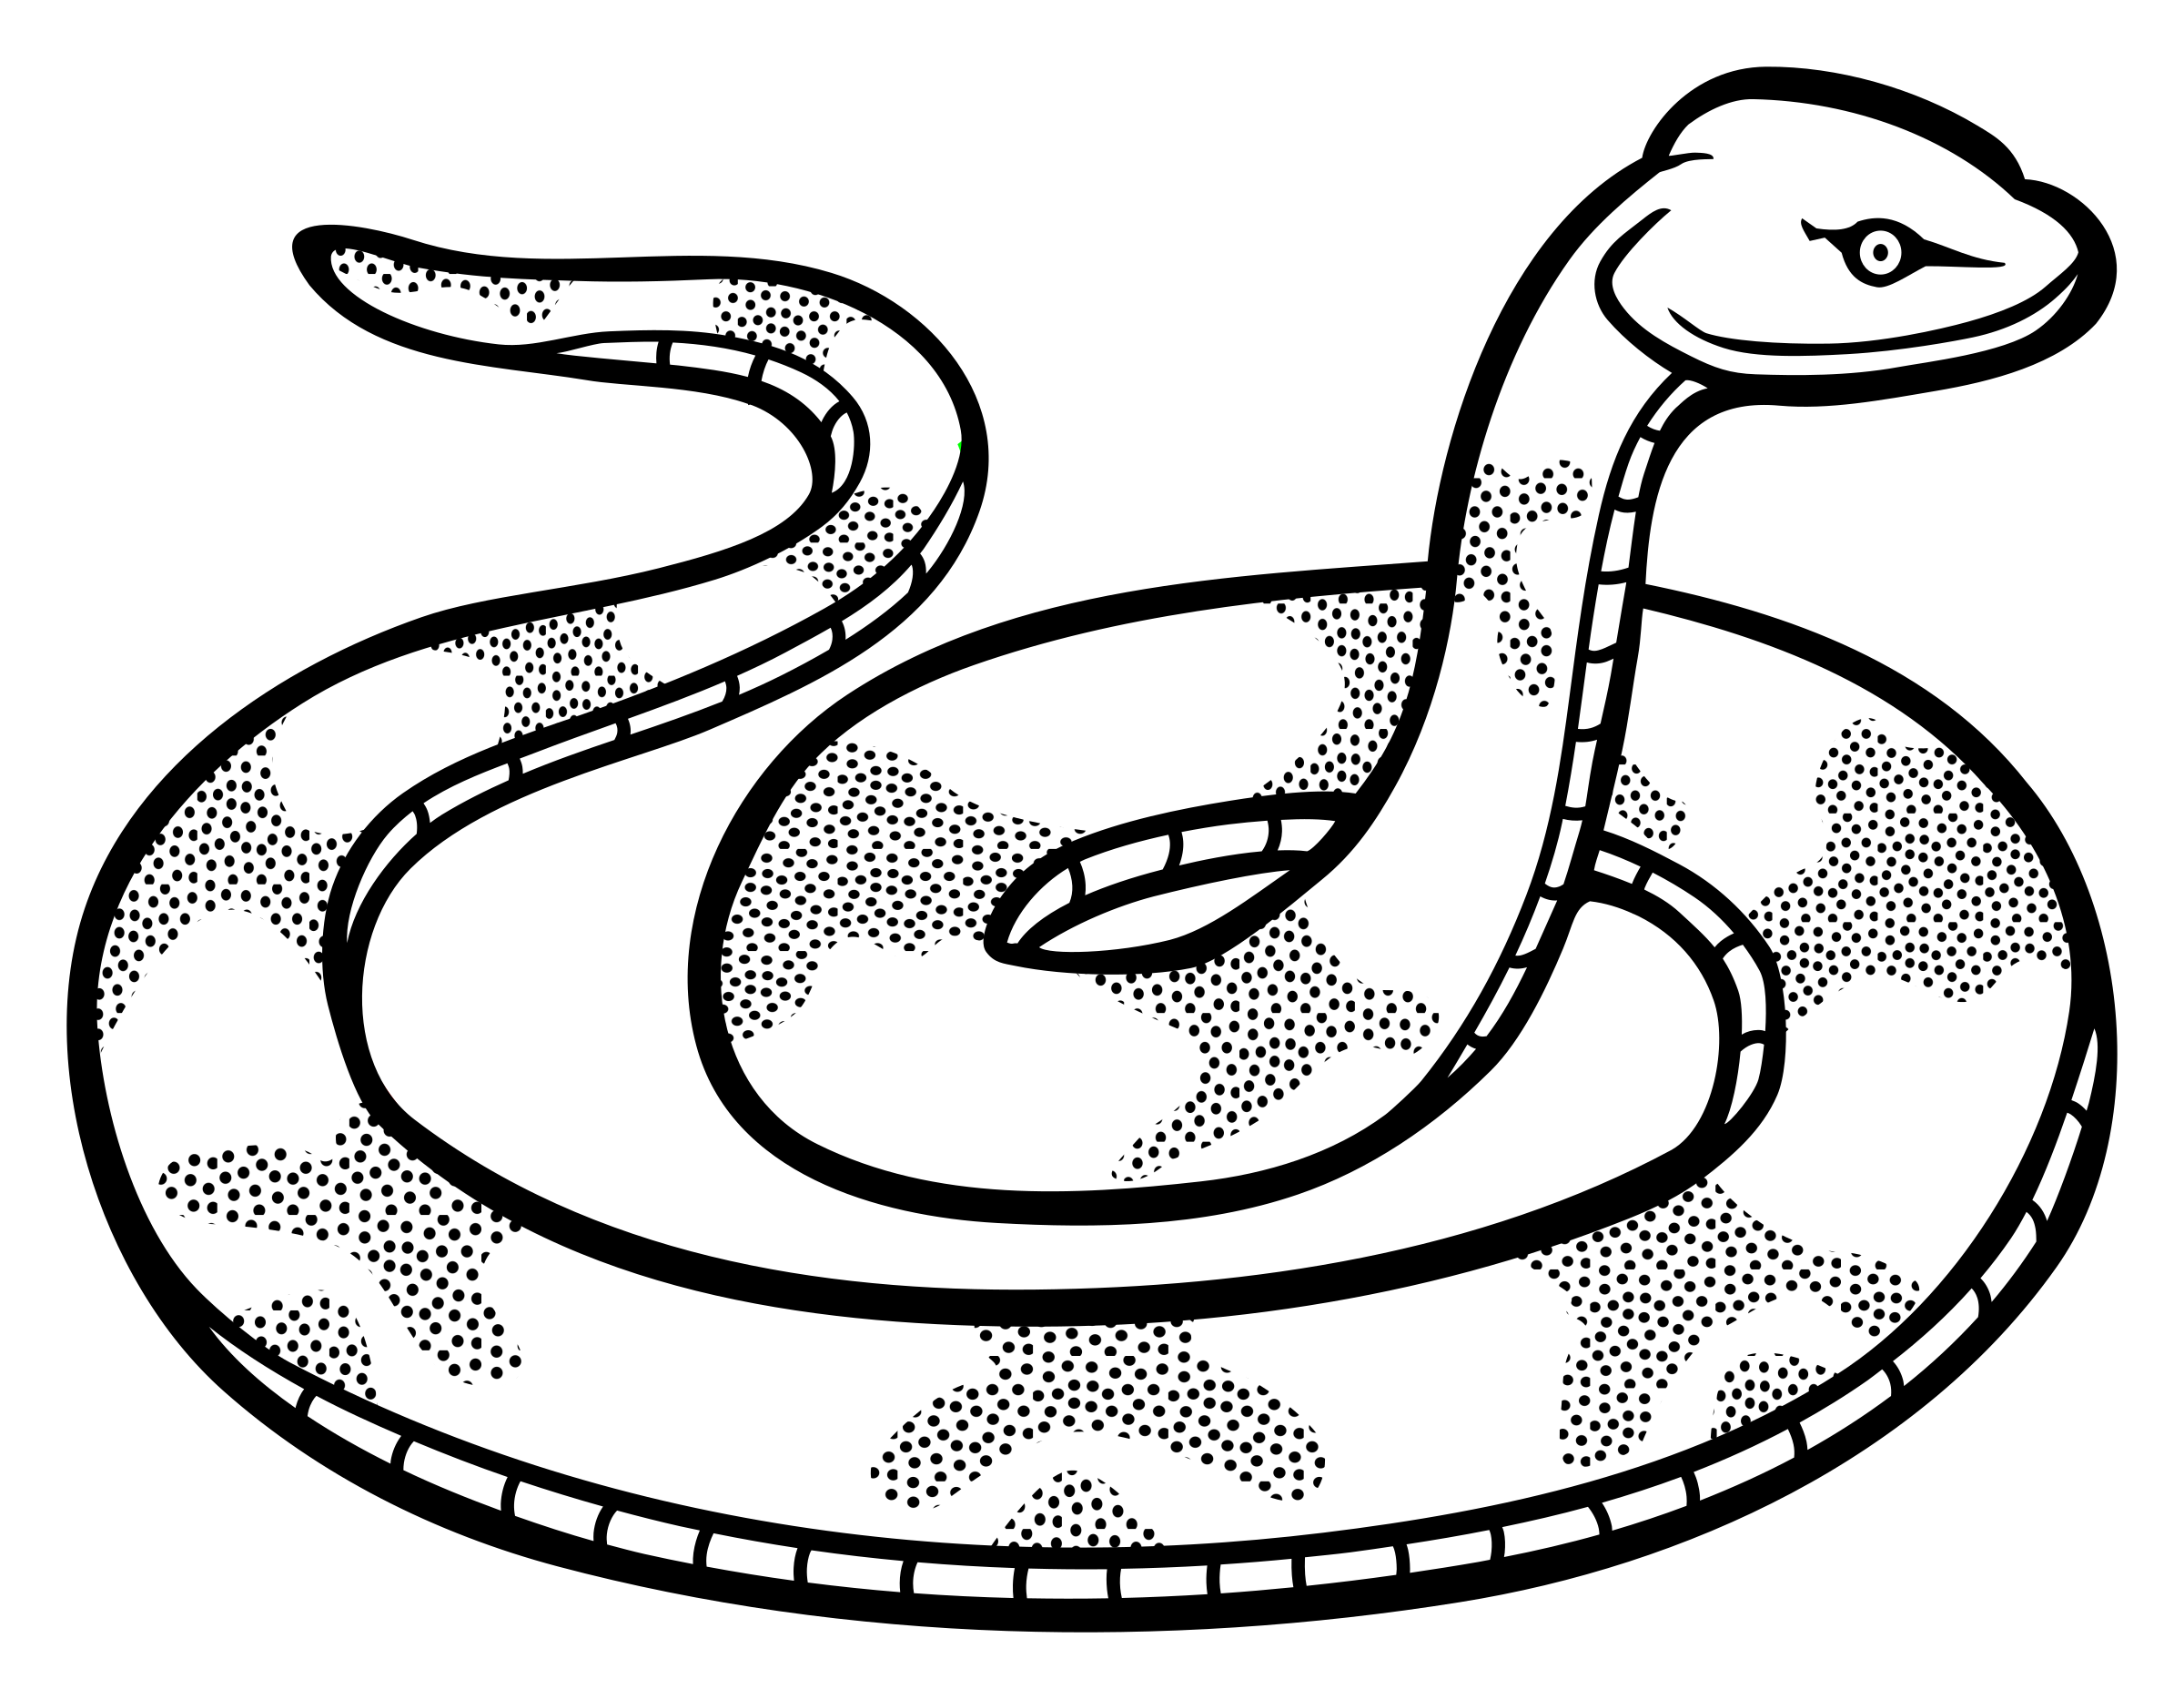 Viper Snake Drawing at GetDrawings Free download